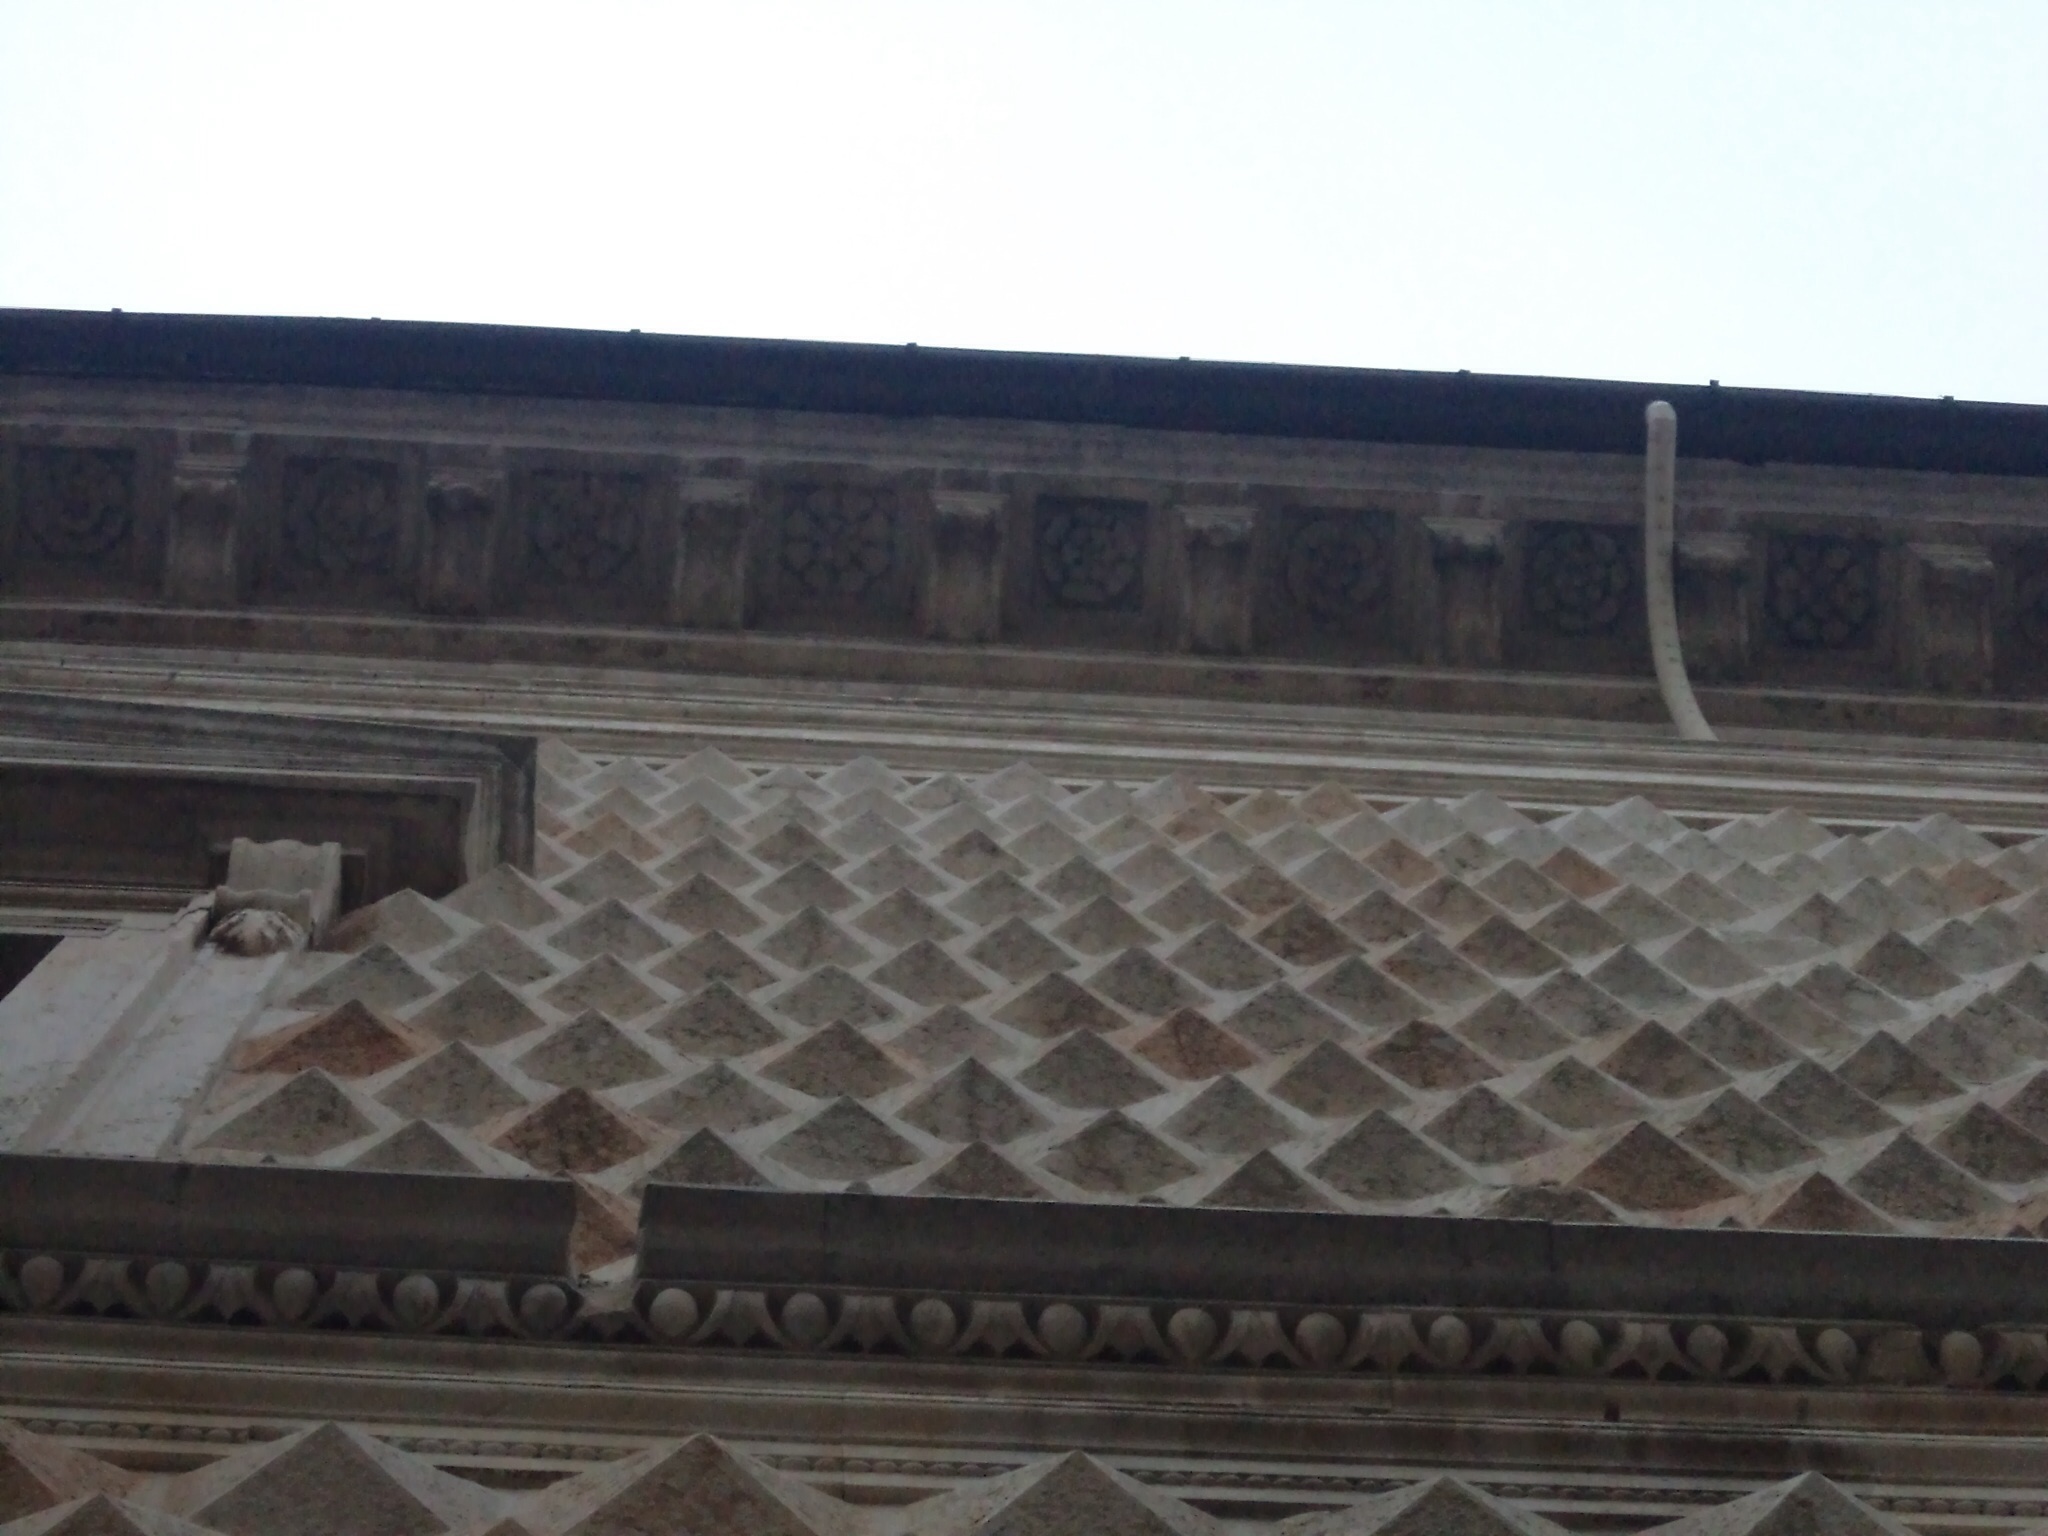 photo: https://upload.wikimedia.org/wikipedia/commons/5/51/Palazzo_dei_Diamanti_Ferrara.jpg